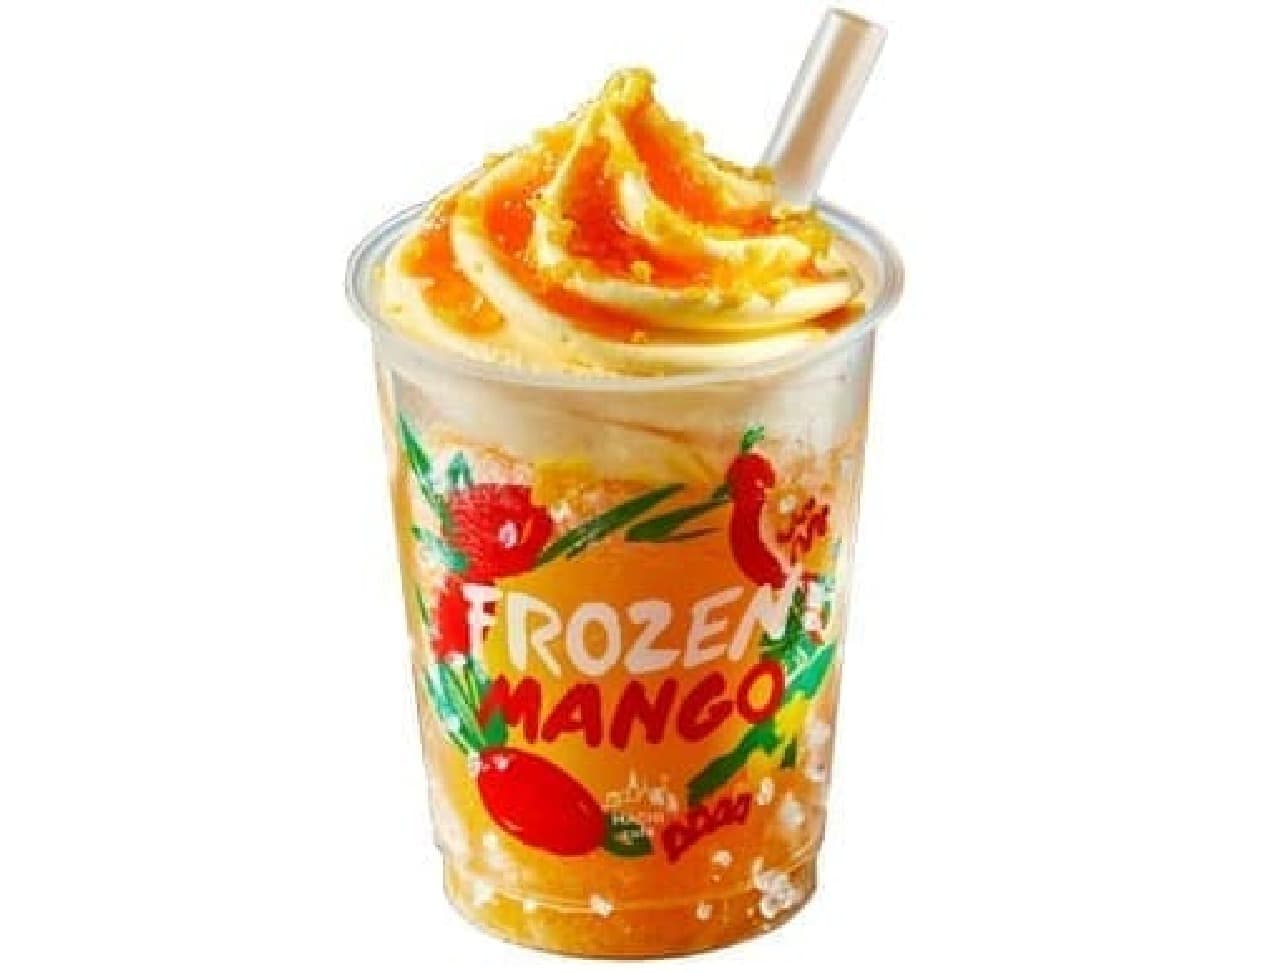 Lawson "Machi Cafe Frozen Mango"